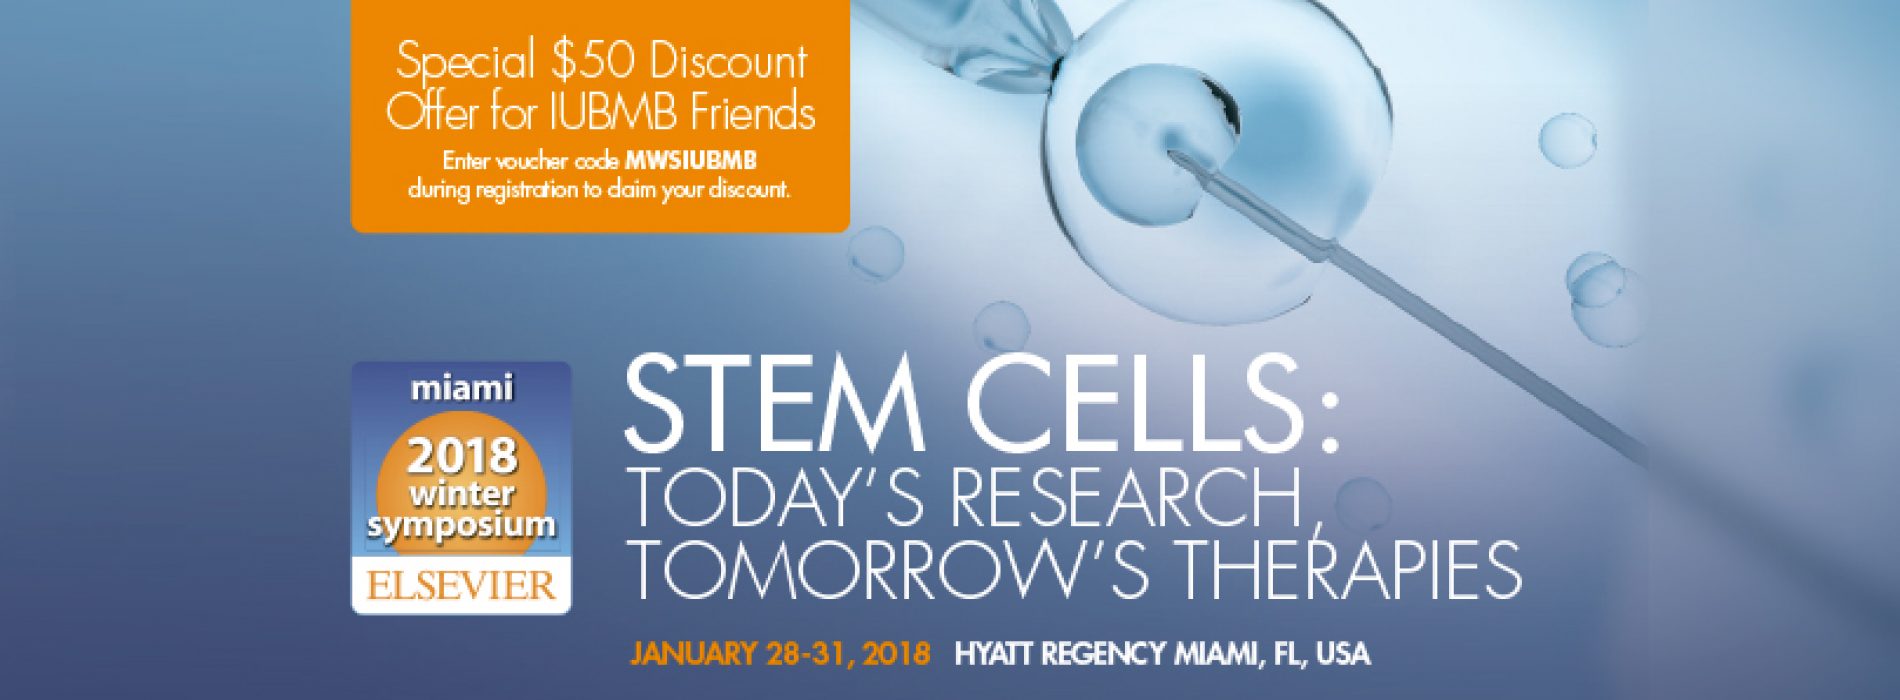 Miami Winter Symposium 2018 on Stem Cells